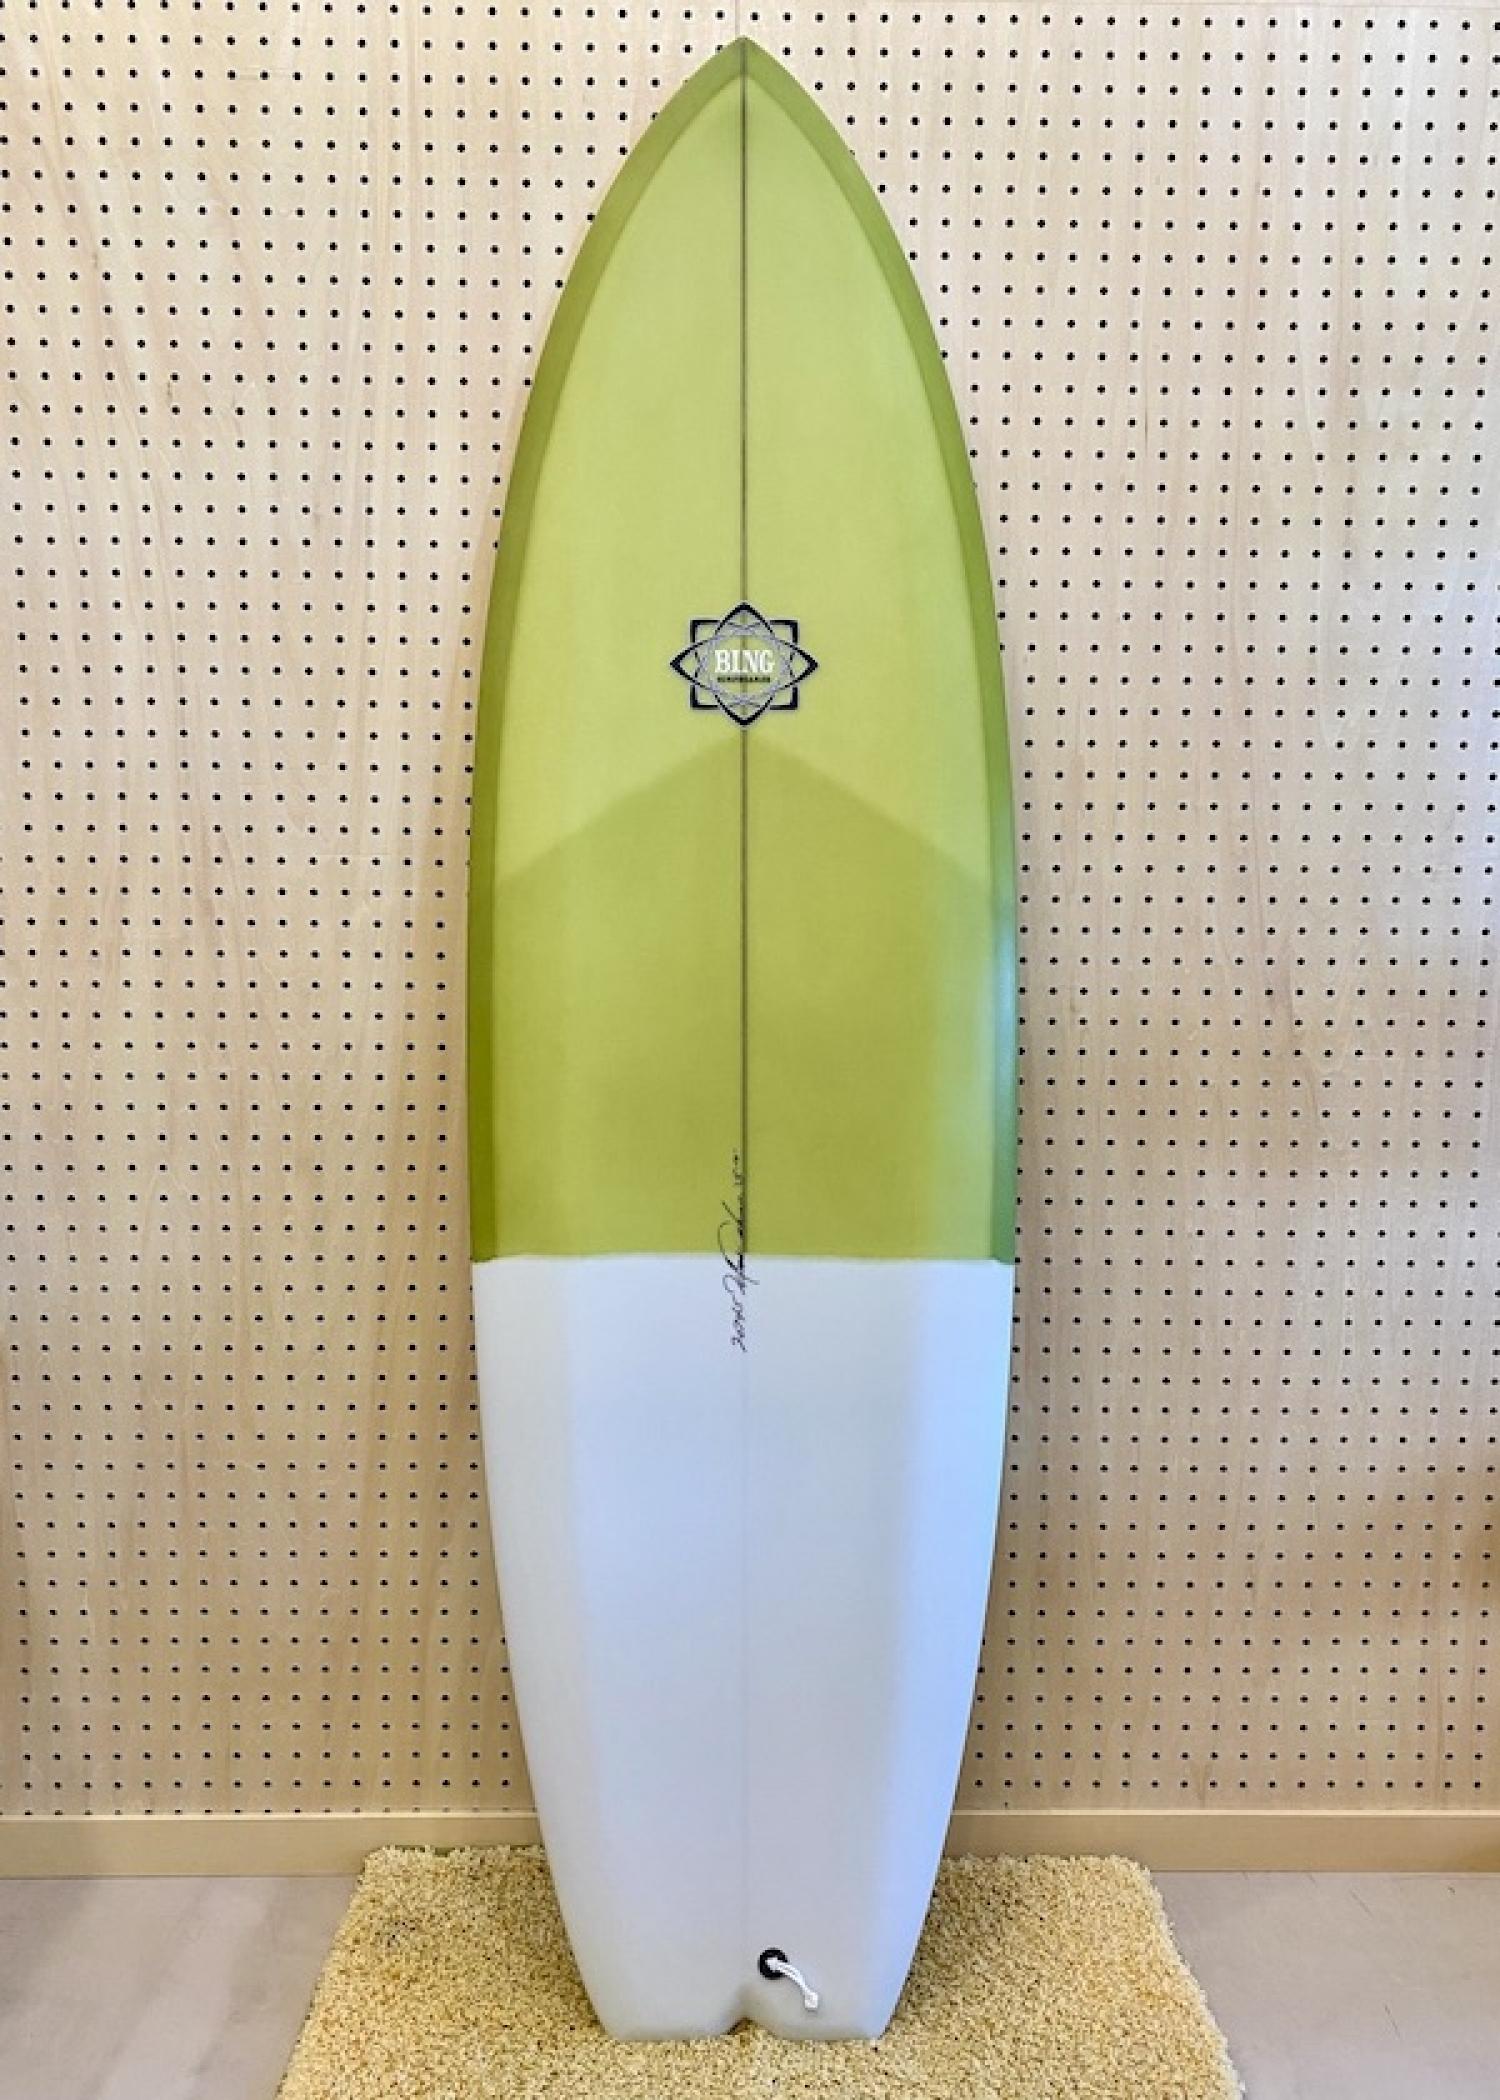 BING SURFBOARDS|沖縄サーフィンショップ「YES SURF」